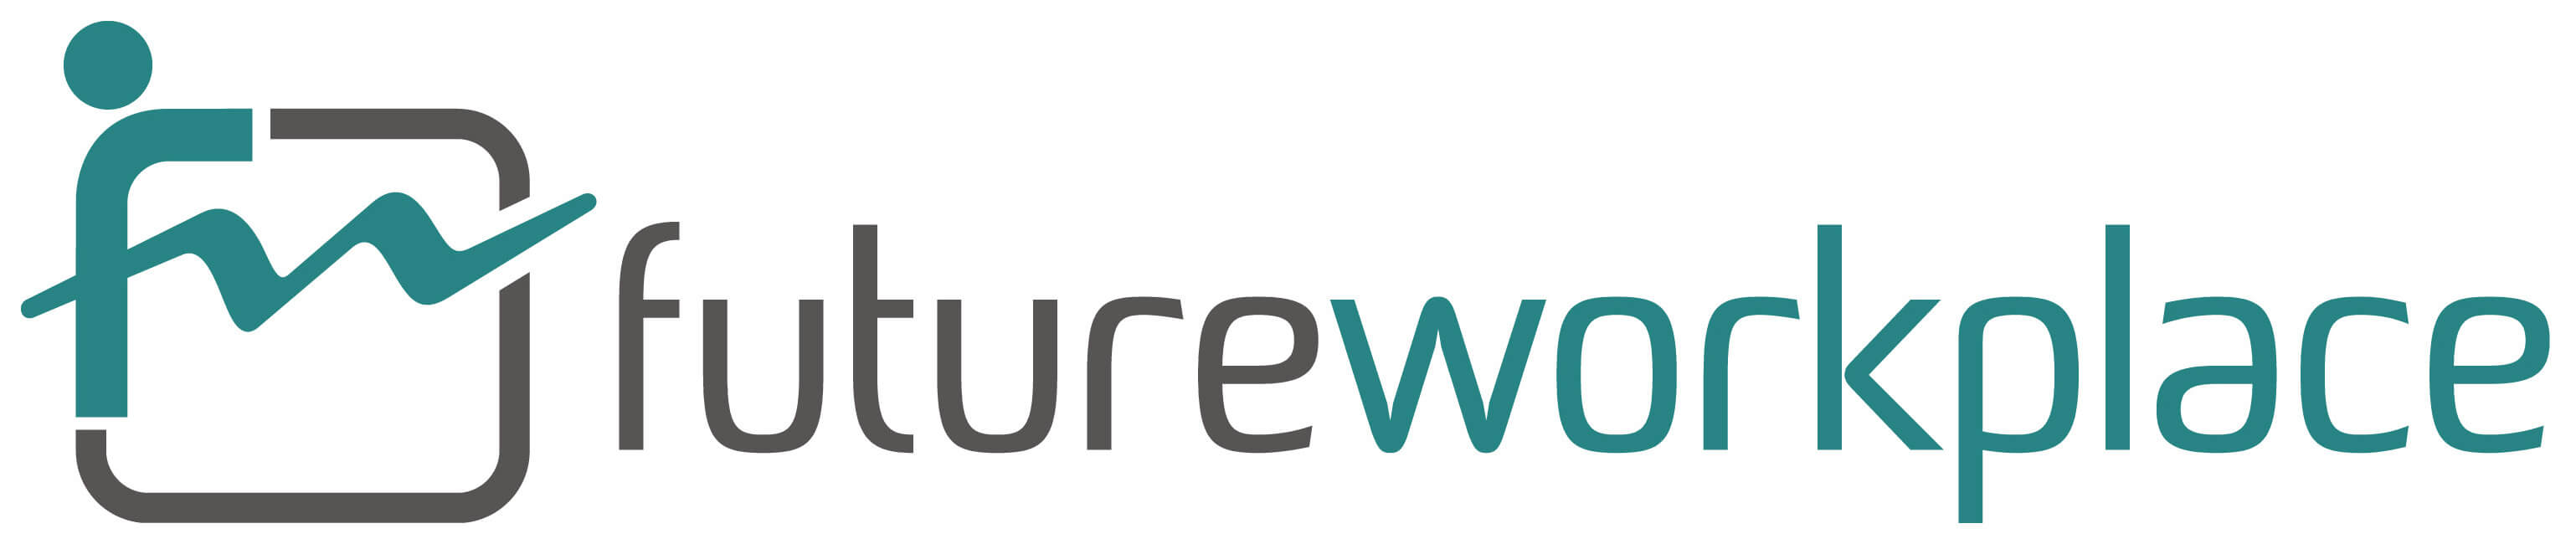 Future Workplace Logo 